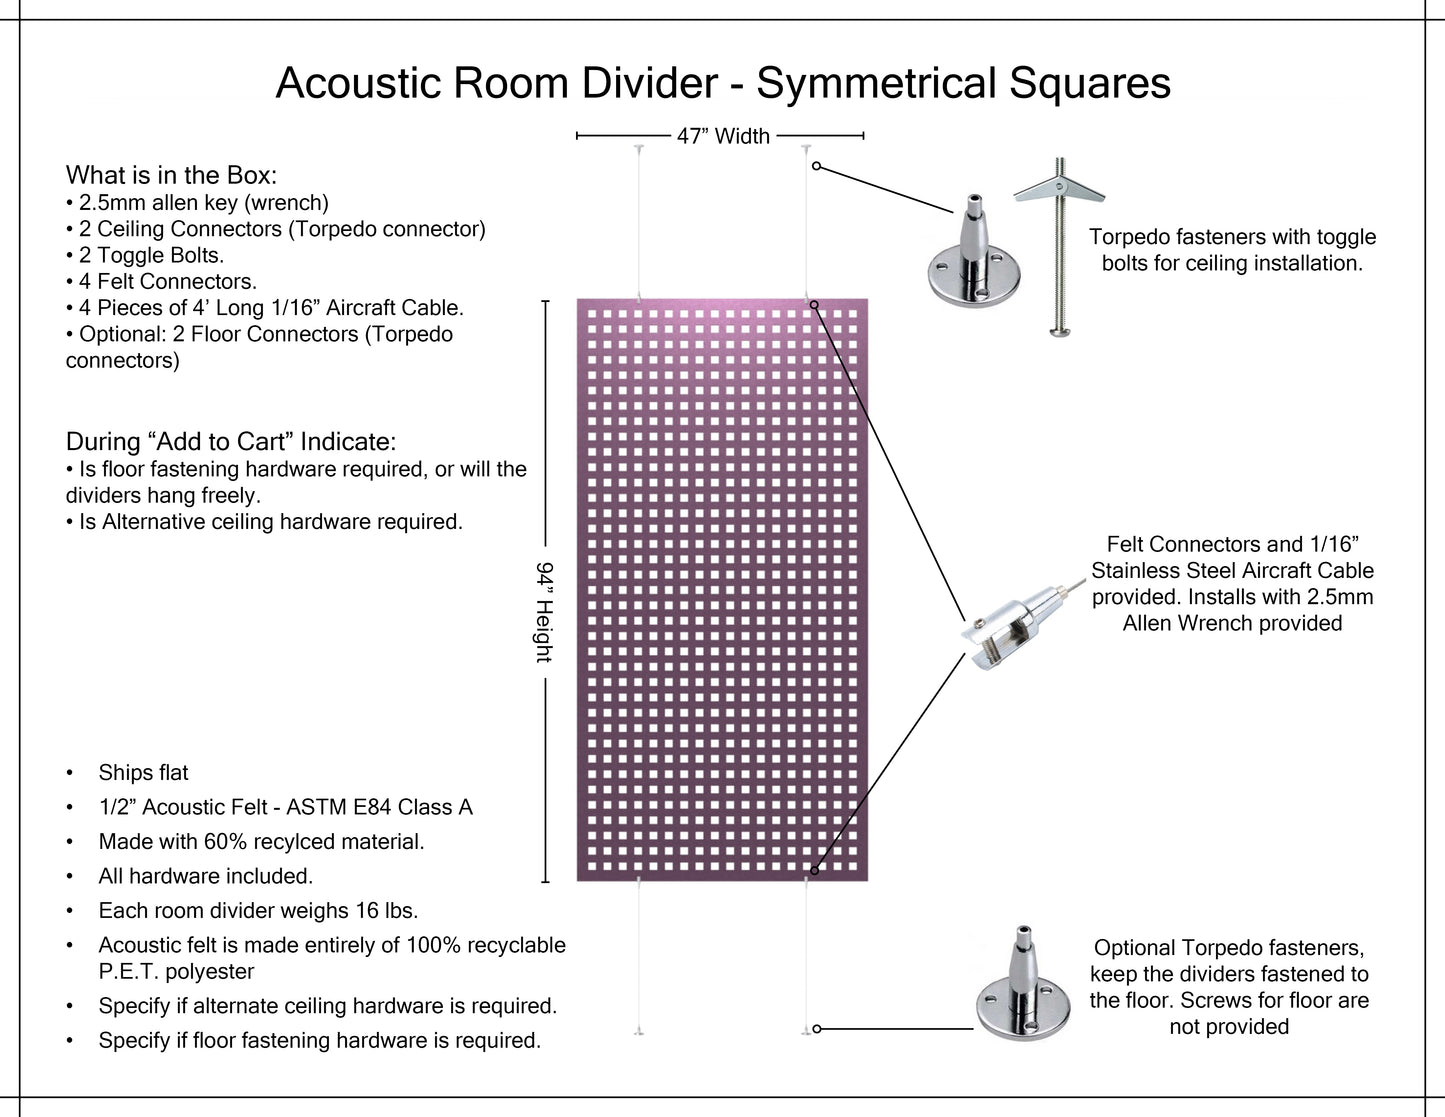 4x8 Acoustic Room Divider - Symmetrical Squares